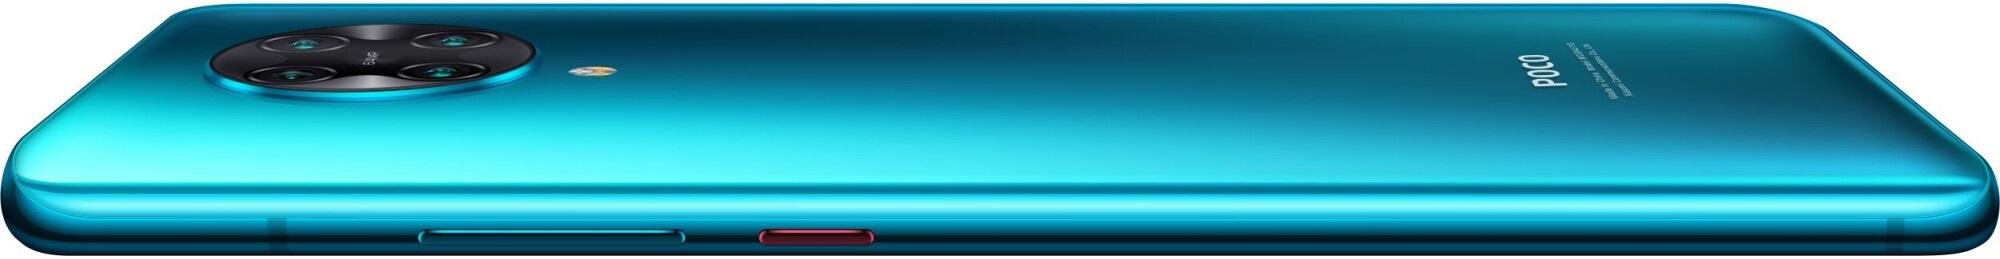 Смартфон Xiaomi Pocophone F2 Pro 8/256GB Neon Blue